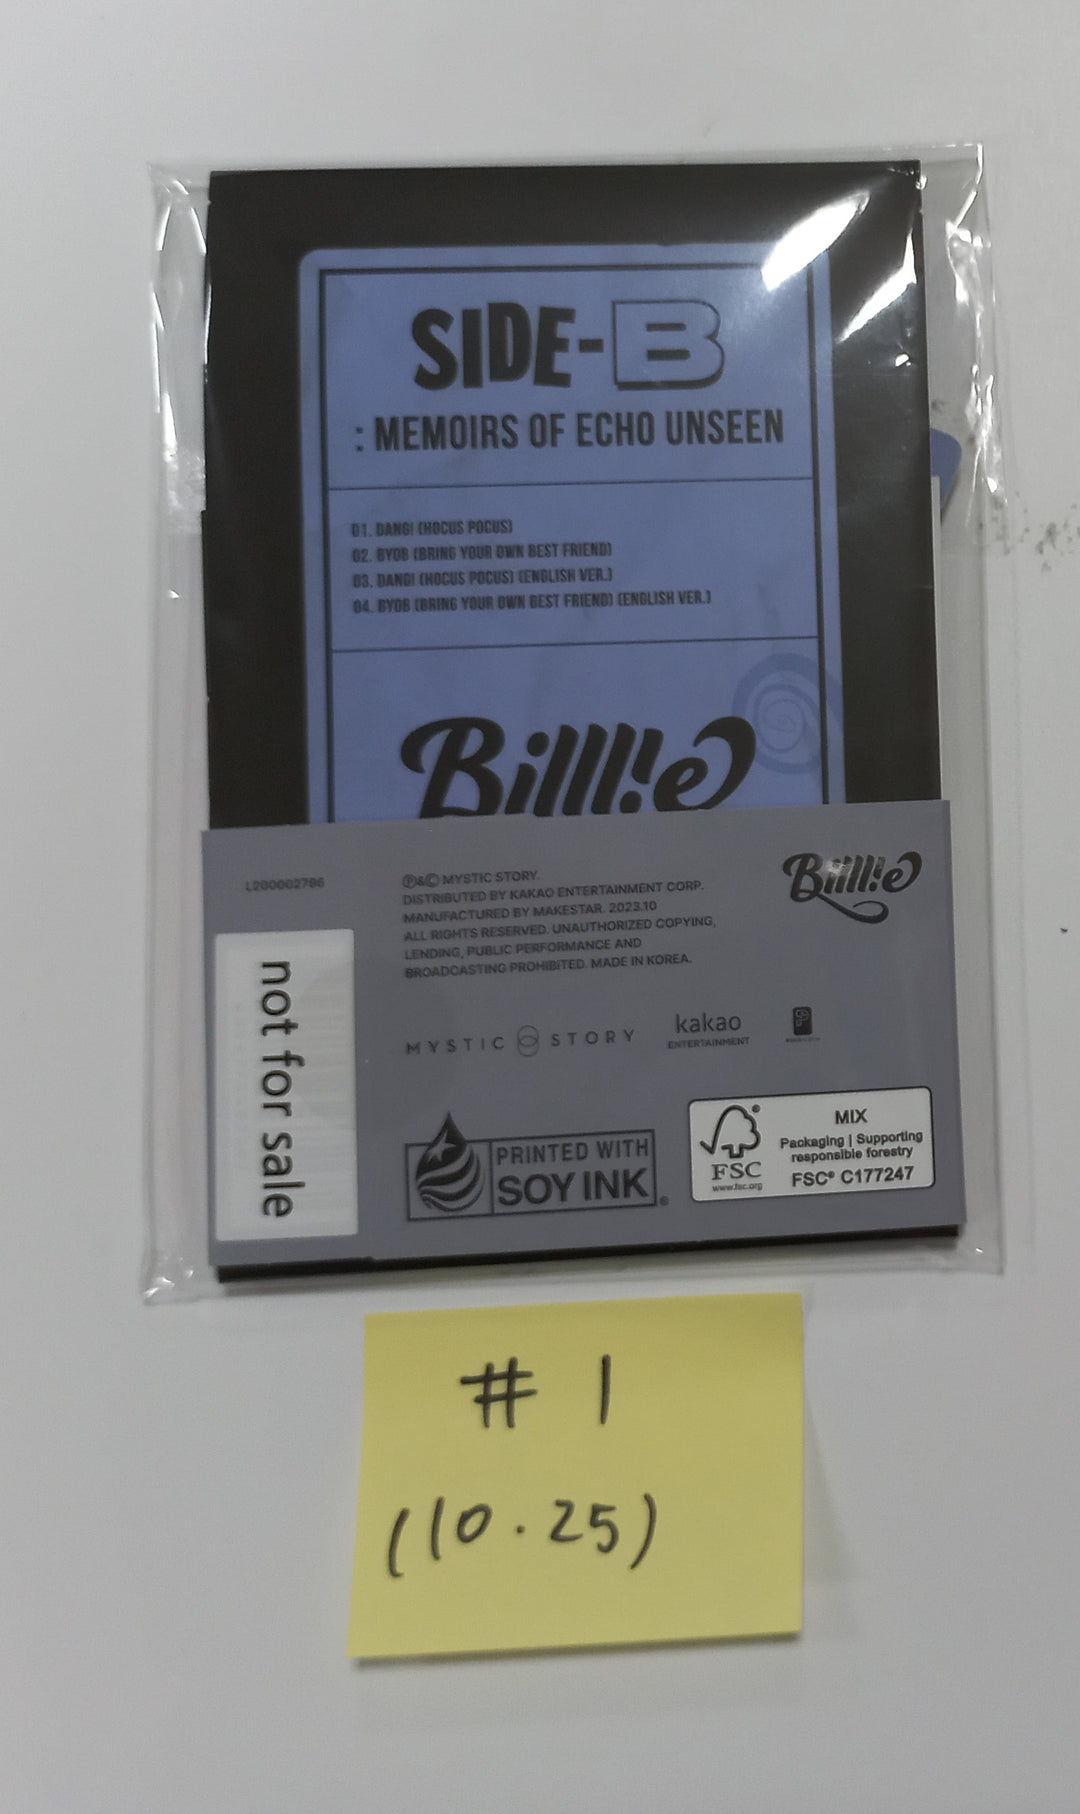 Billlie "side-B : memoirs of echo unseen" - Hand Autographed(Signed) Promo Album [Poca Ver.] [23.10.25]